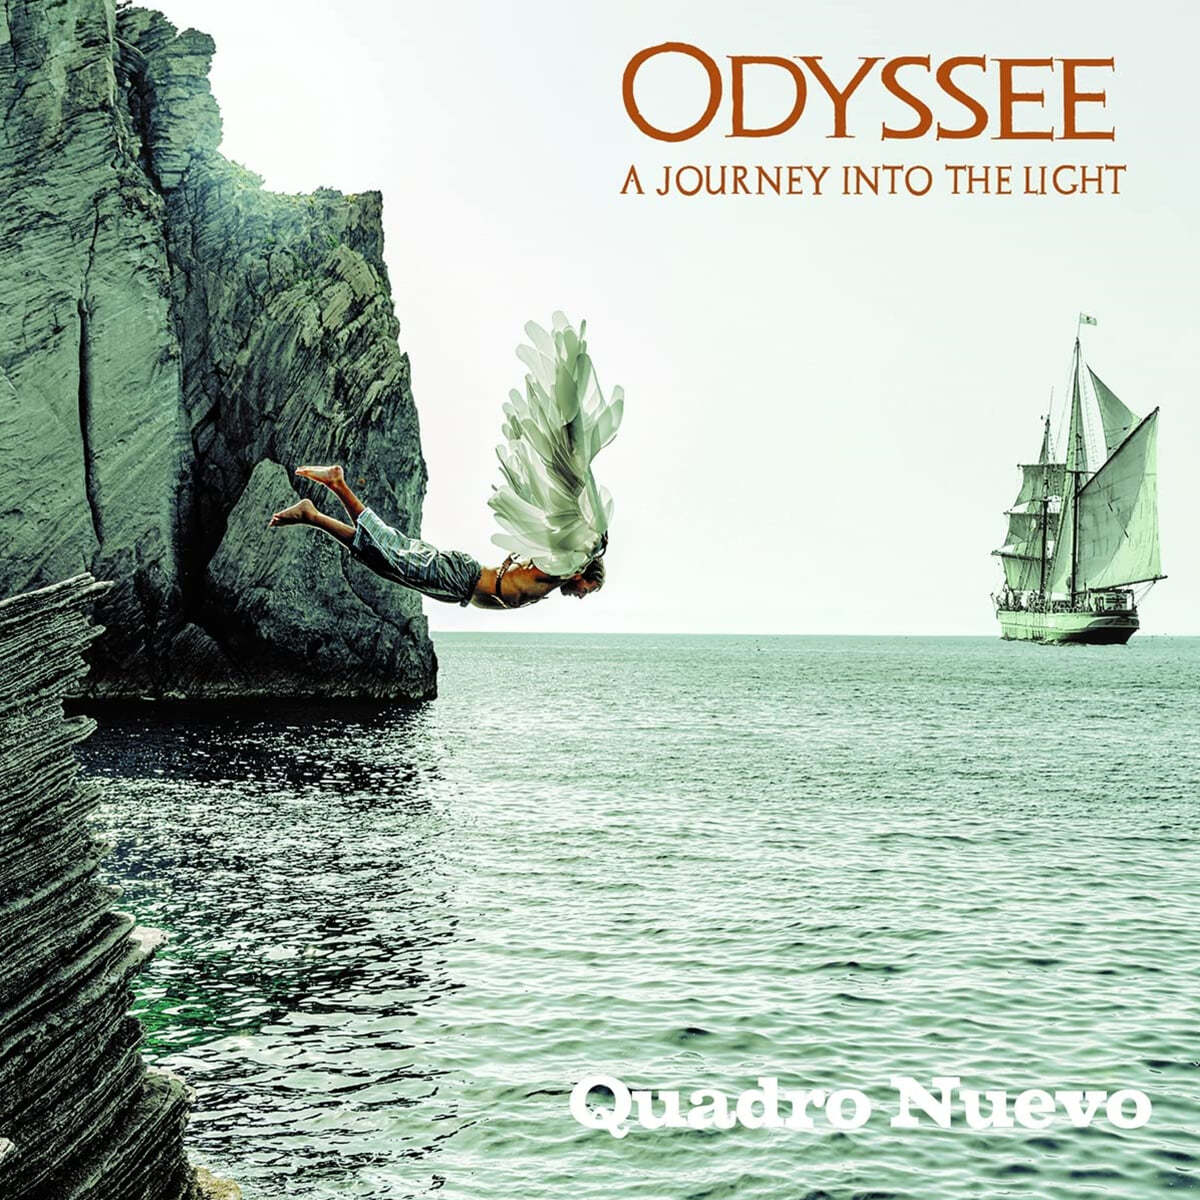 Quadro Nuevo (콰드로 누에보) - Odyssee: A Journey Into The Light [LP] 